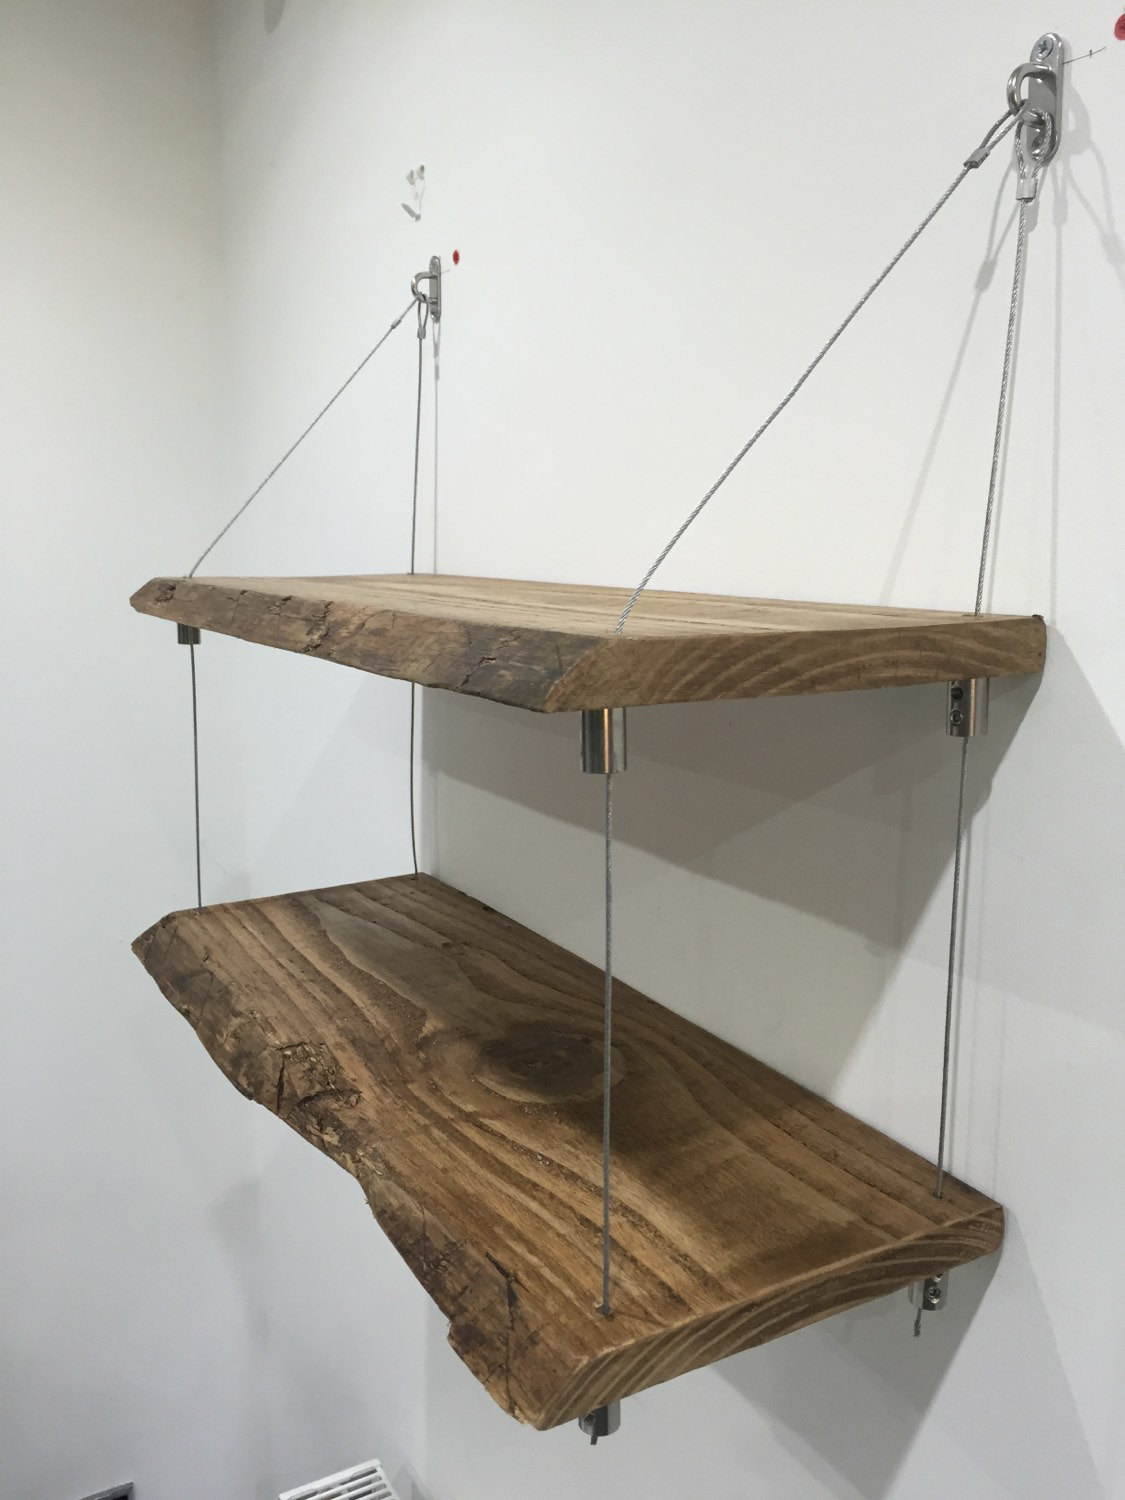 Solid wood edge shelves hanging